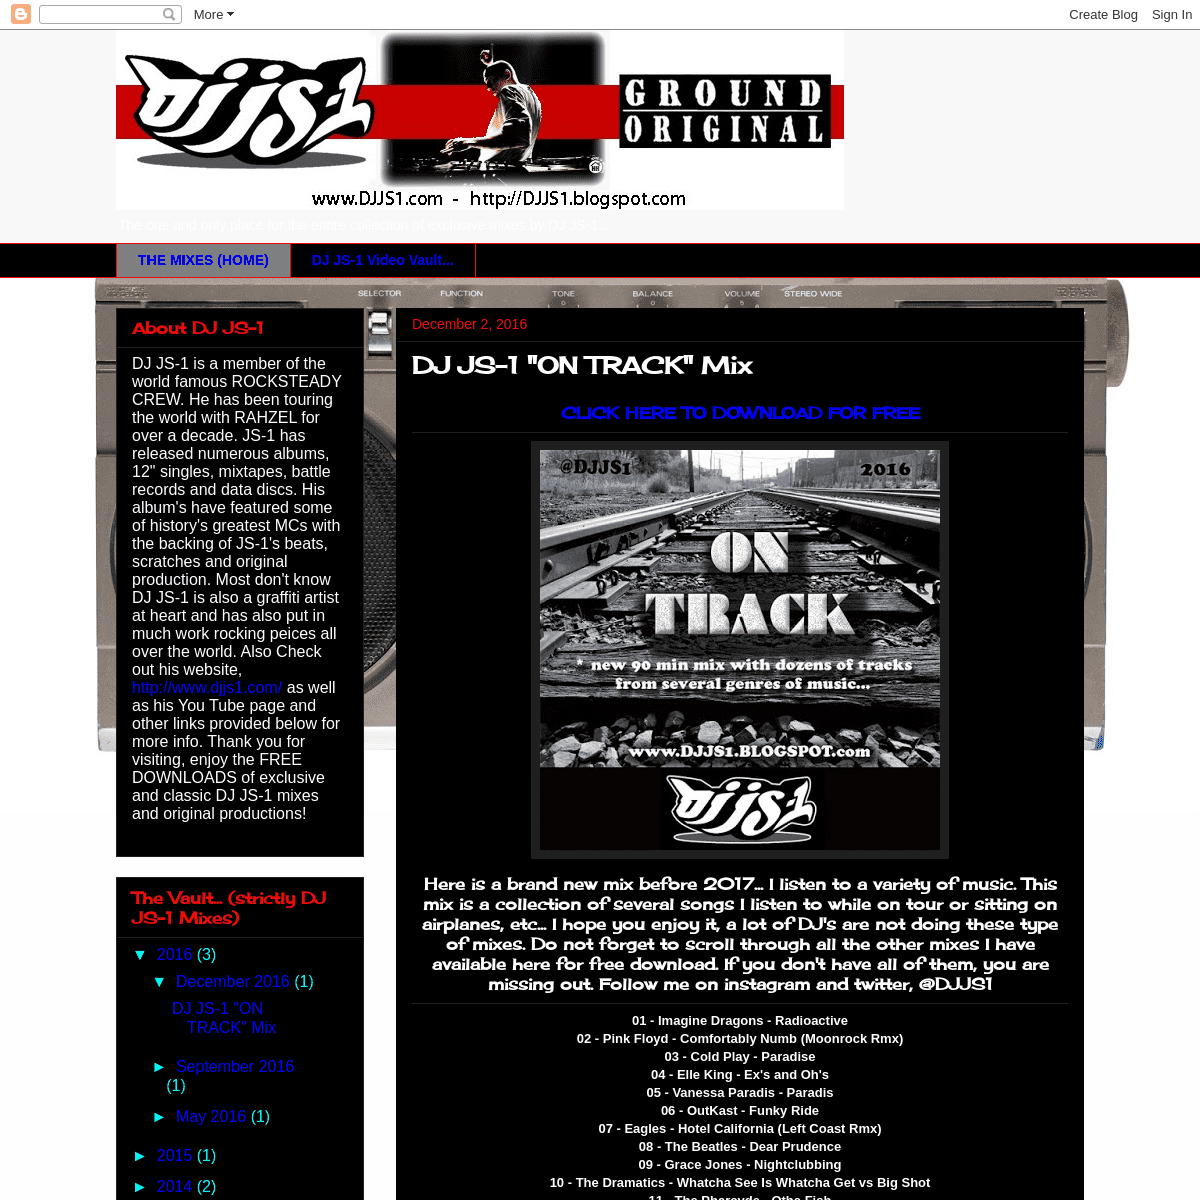 A complete backup of djjs1.blogspot.com